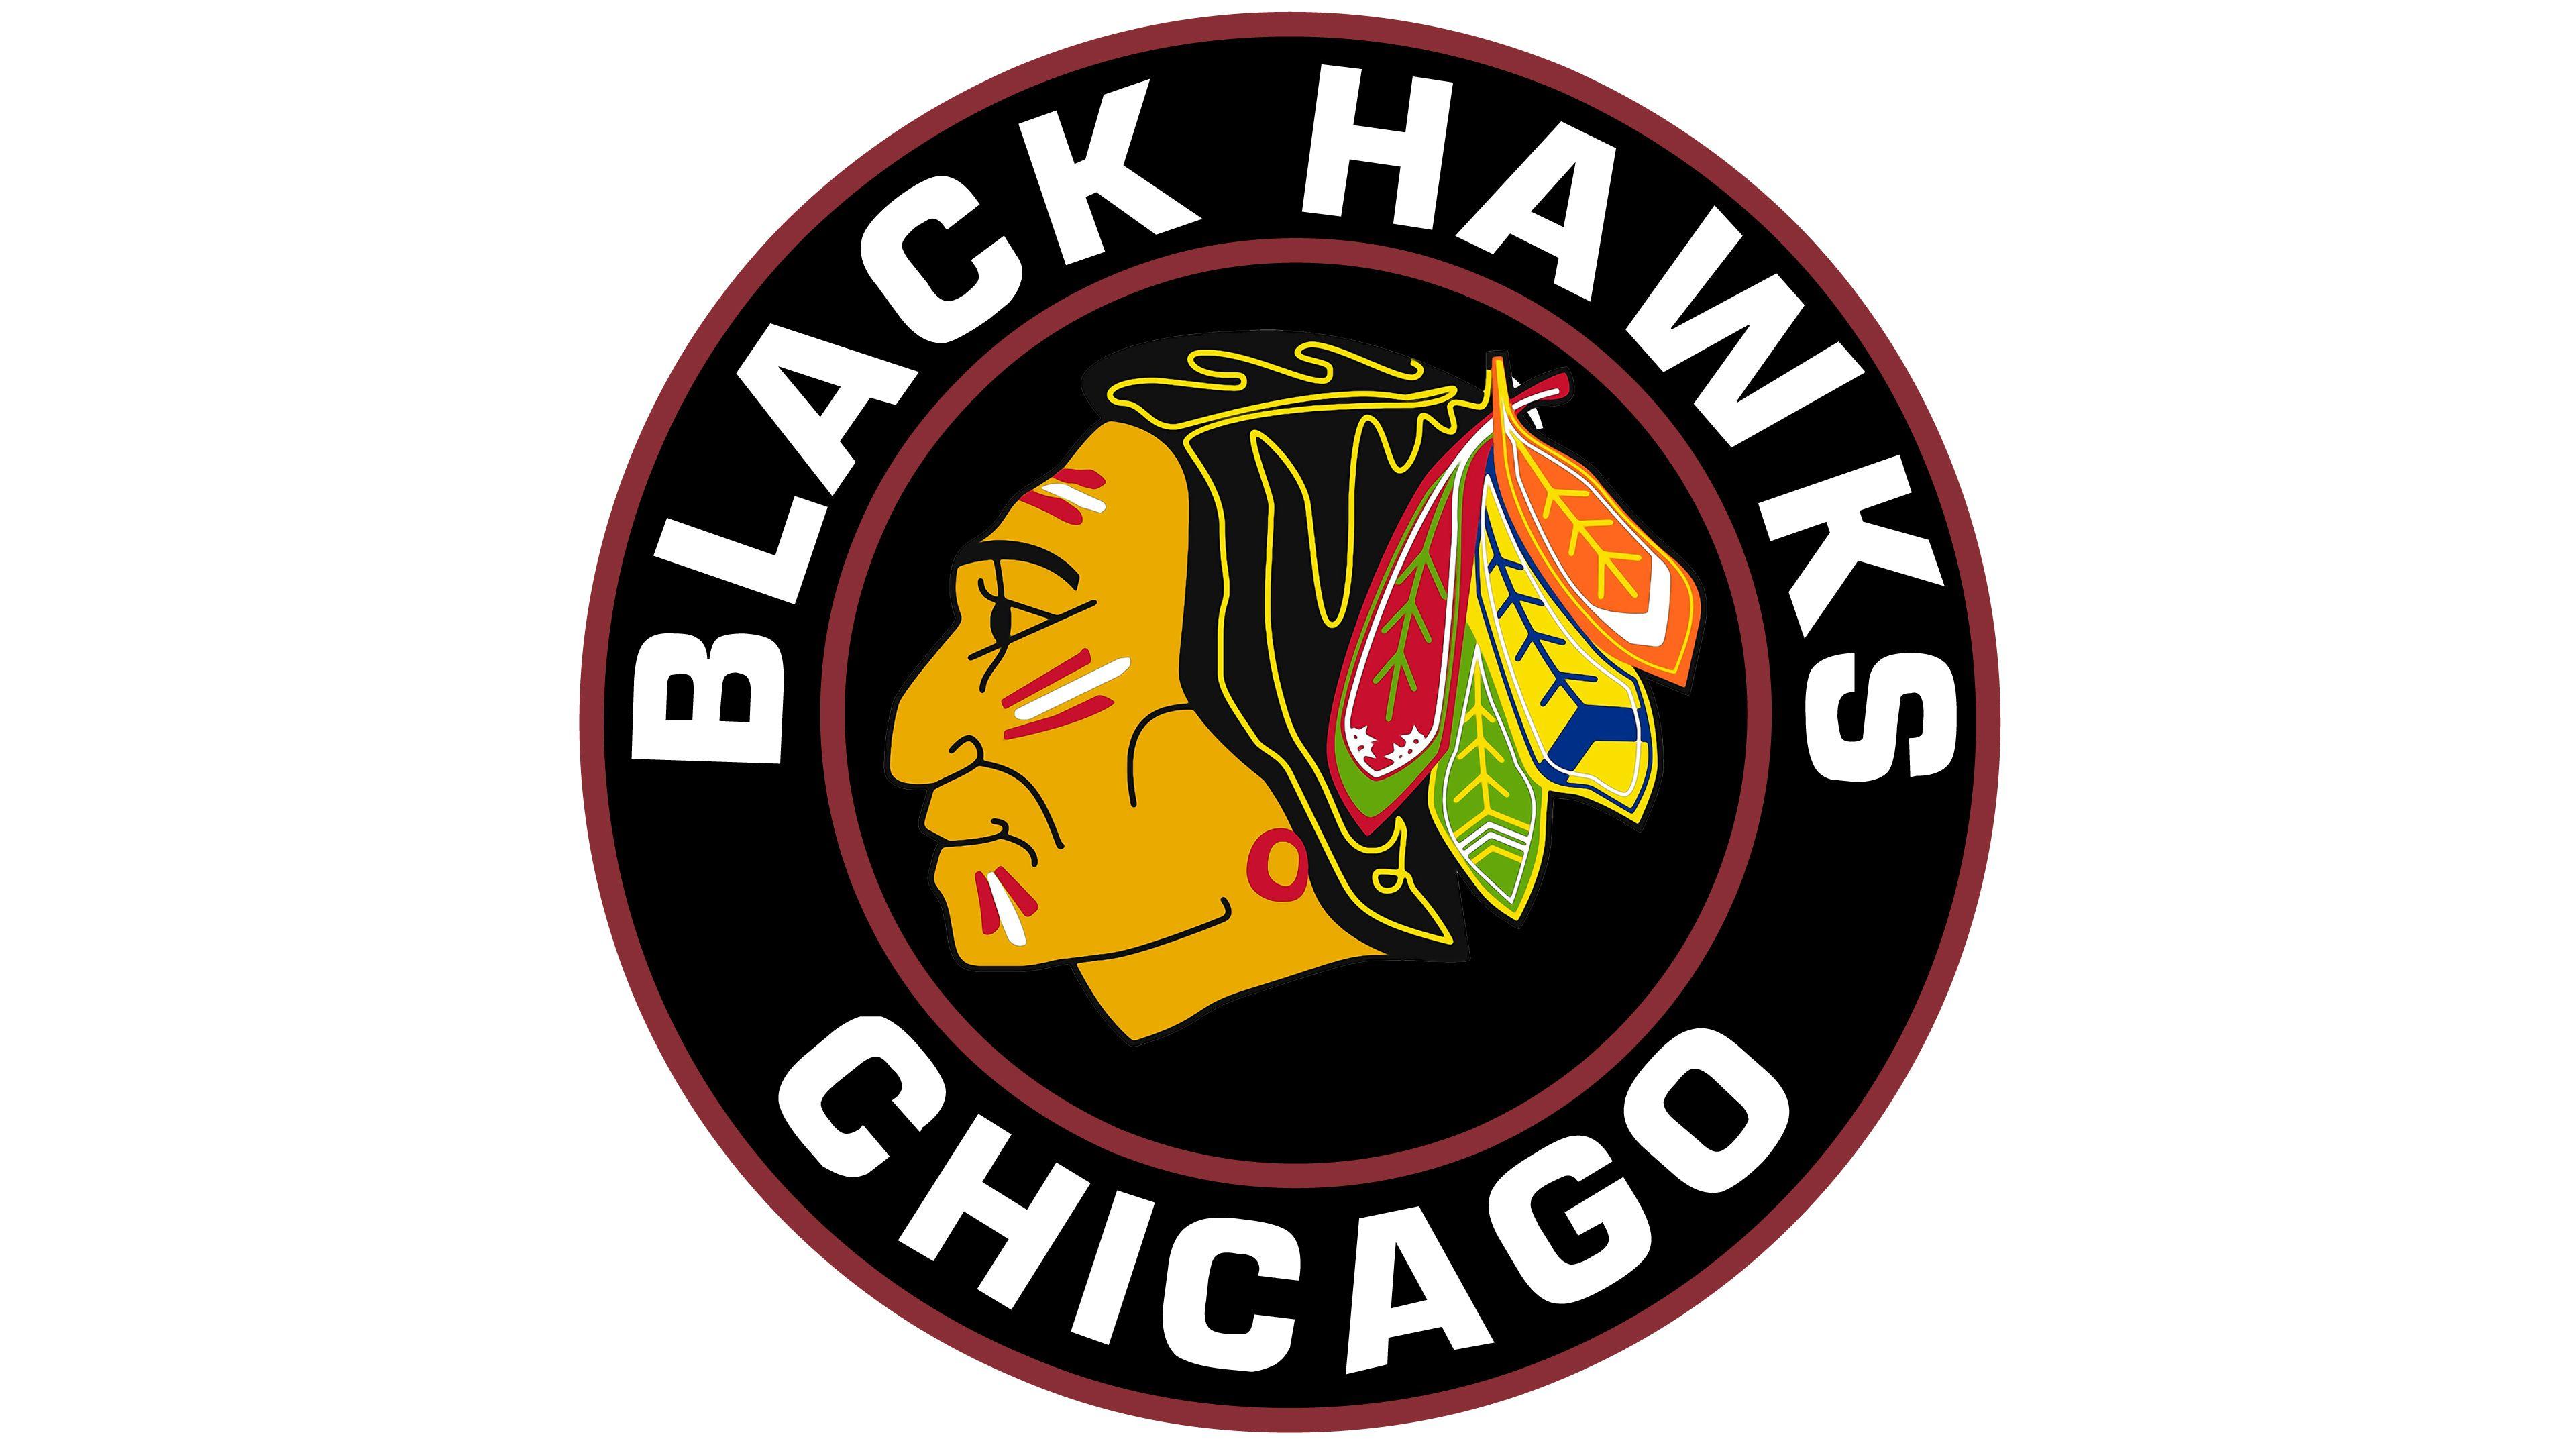 Blackhawks Logo - Chicago Blackhawks logo - Interesting History Team Name and emblem